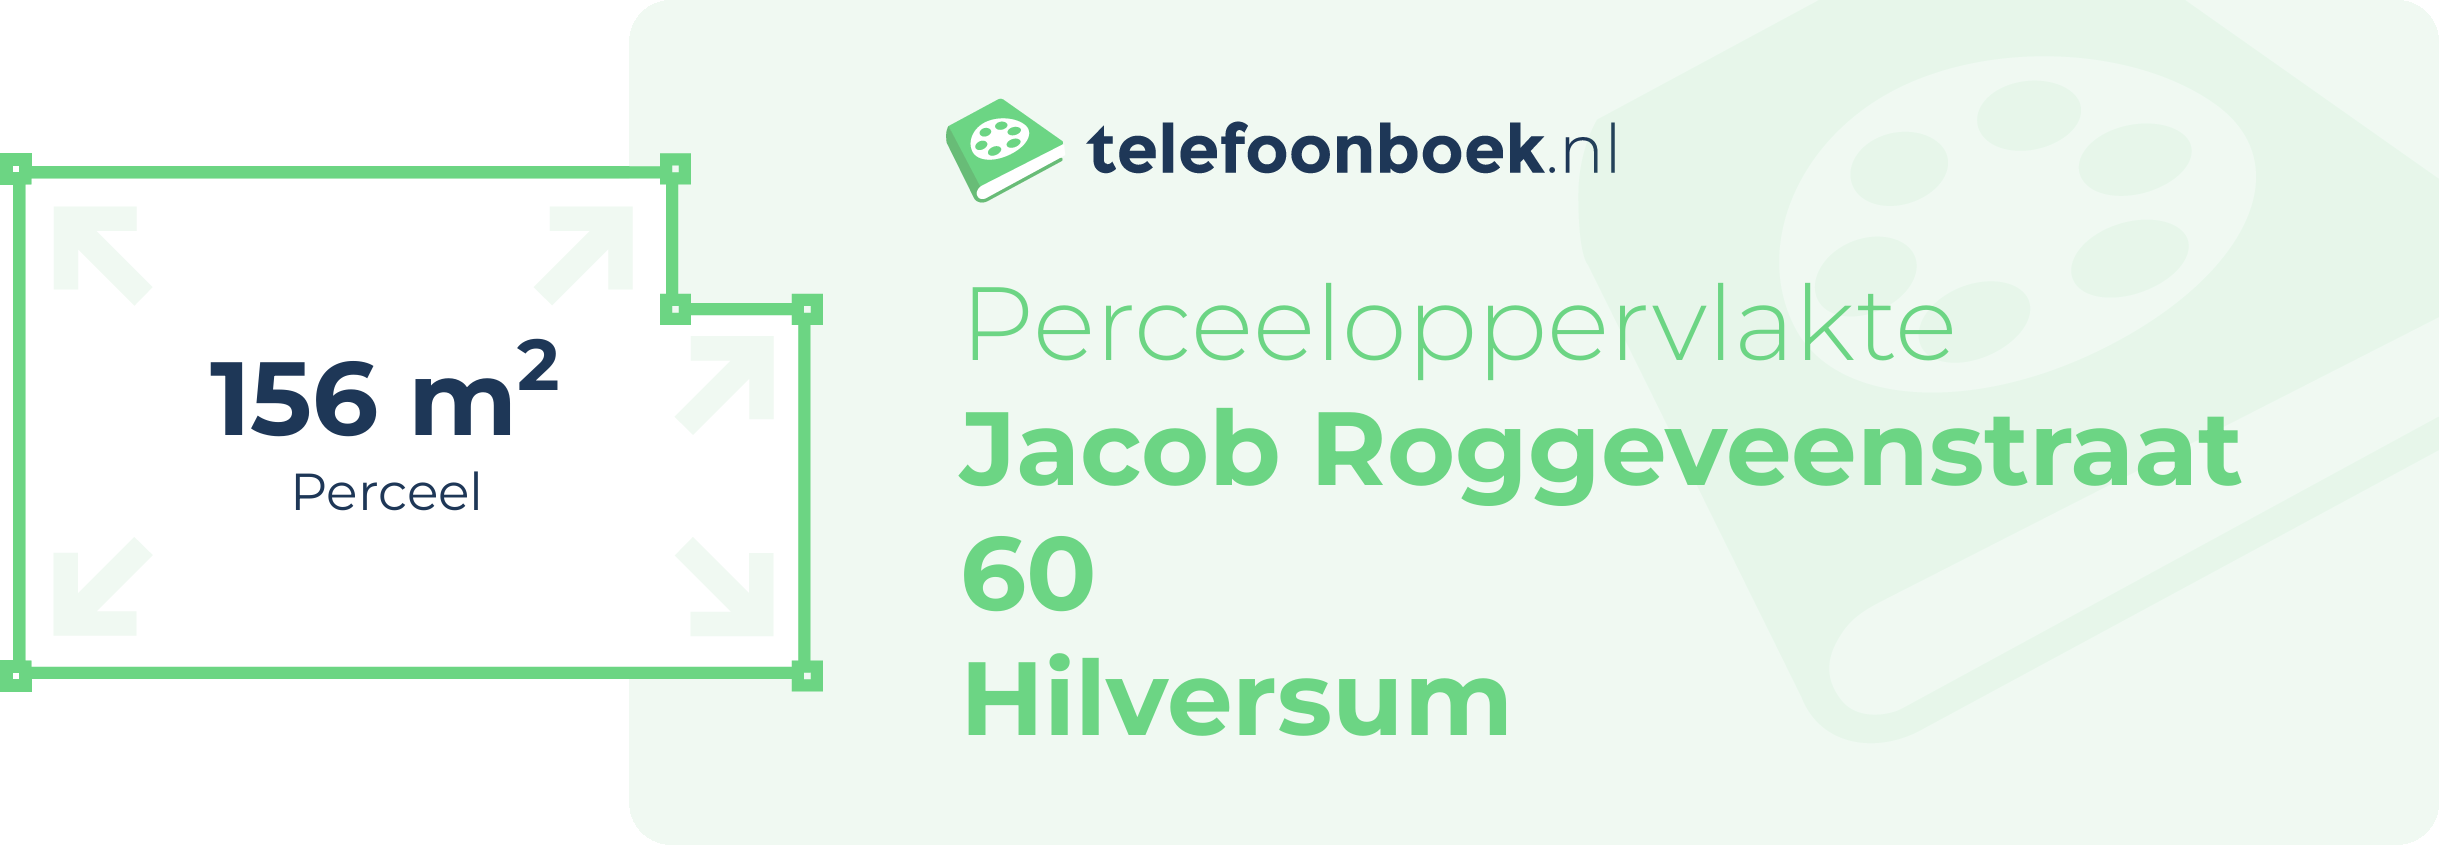 Perceeloppervlakte Jacob Roggeveenstraat 60 Hilversum